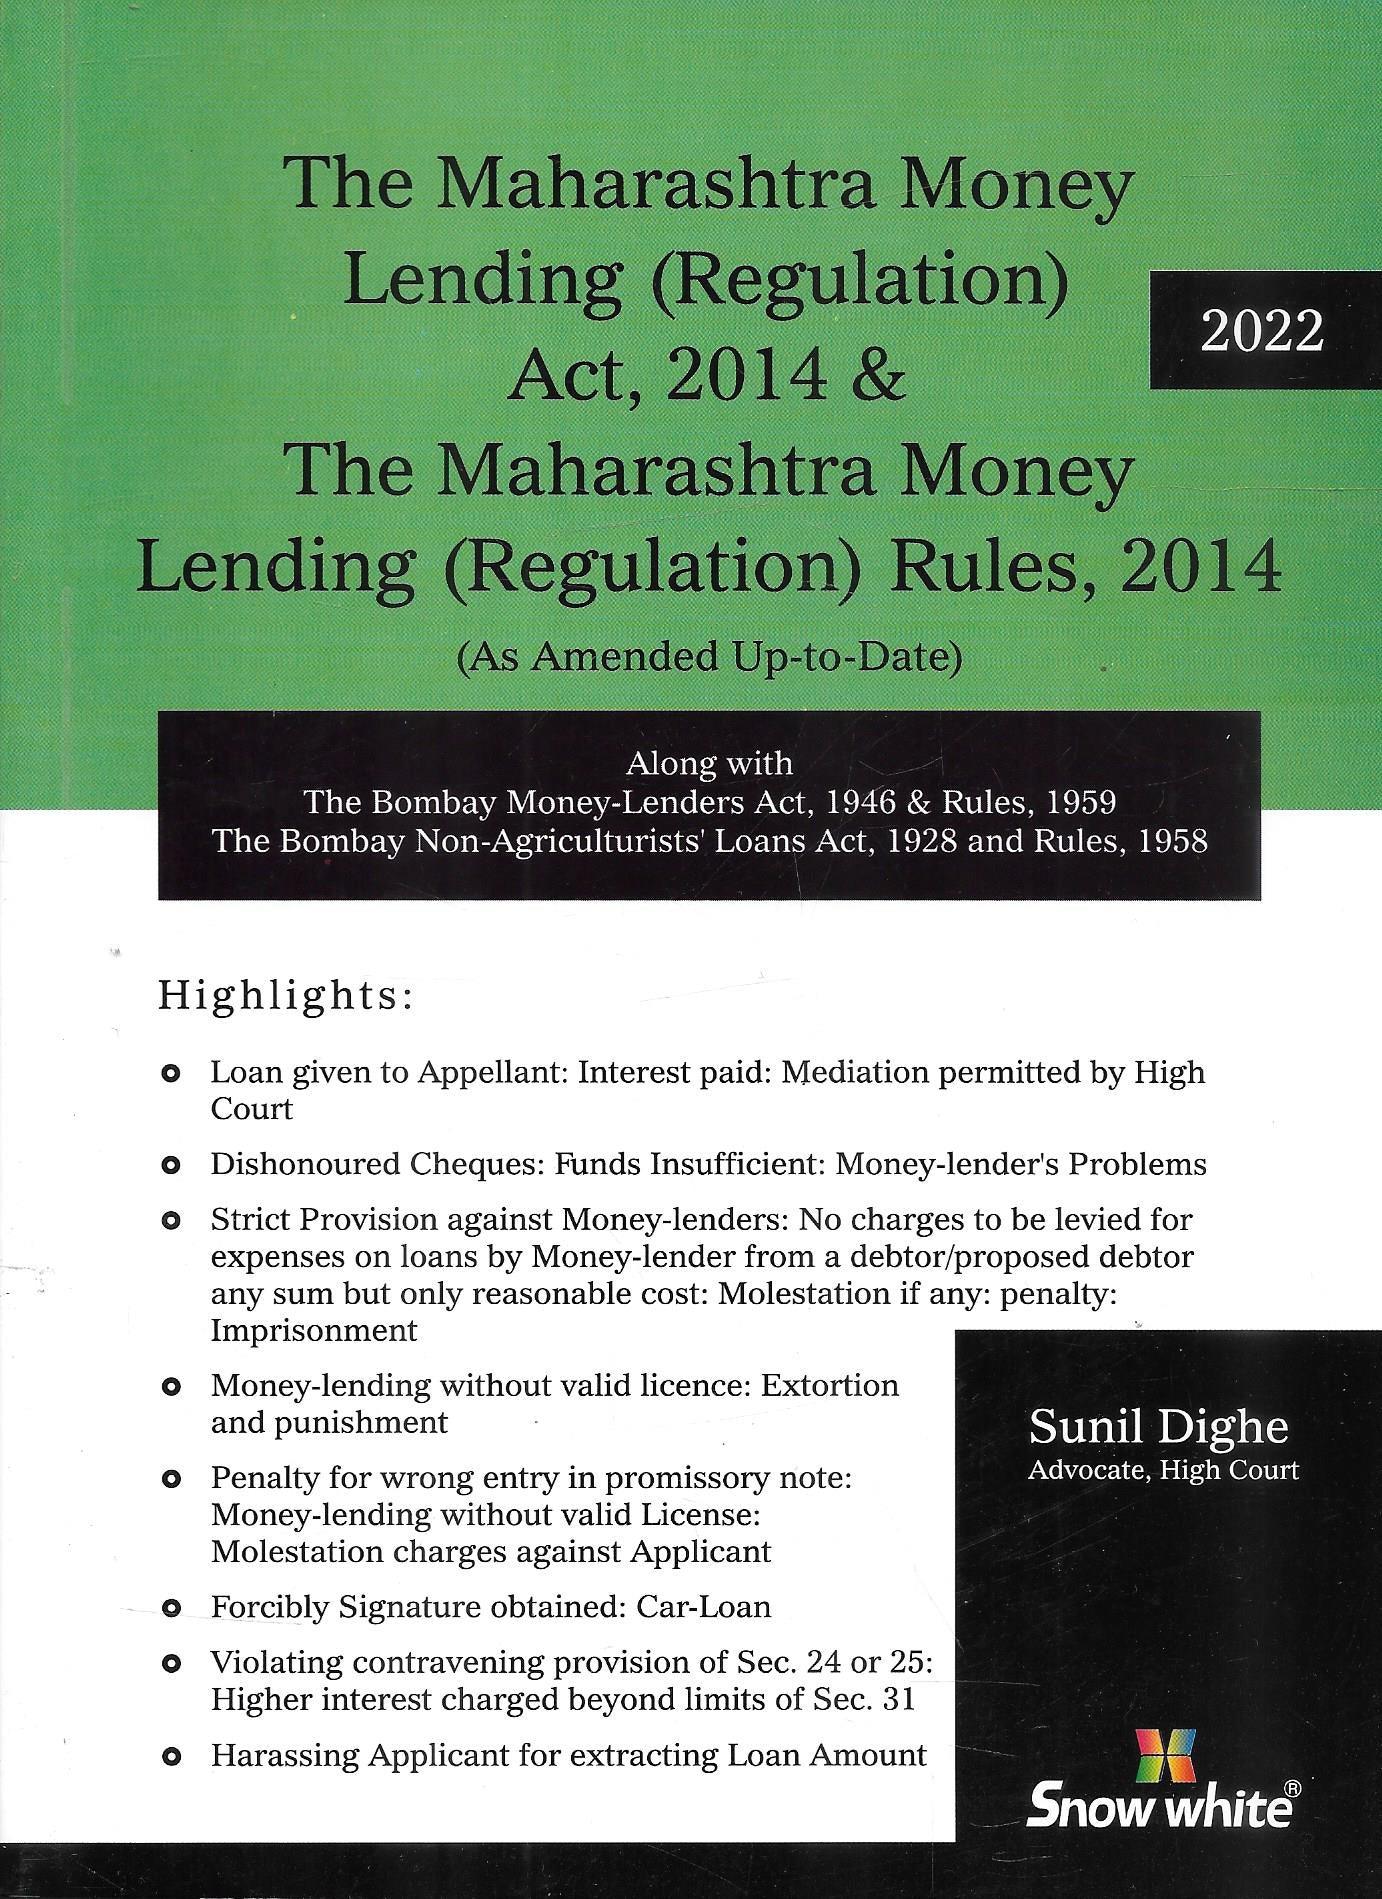 The Money Lending (Regulation) Act, 2014 & The Maharashtra Money Lending (Regulation) Rules, 2014